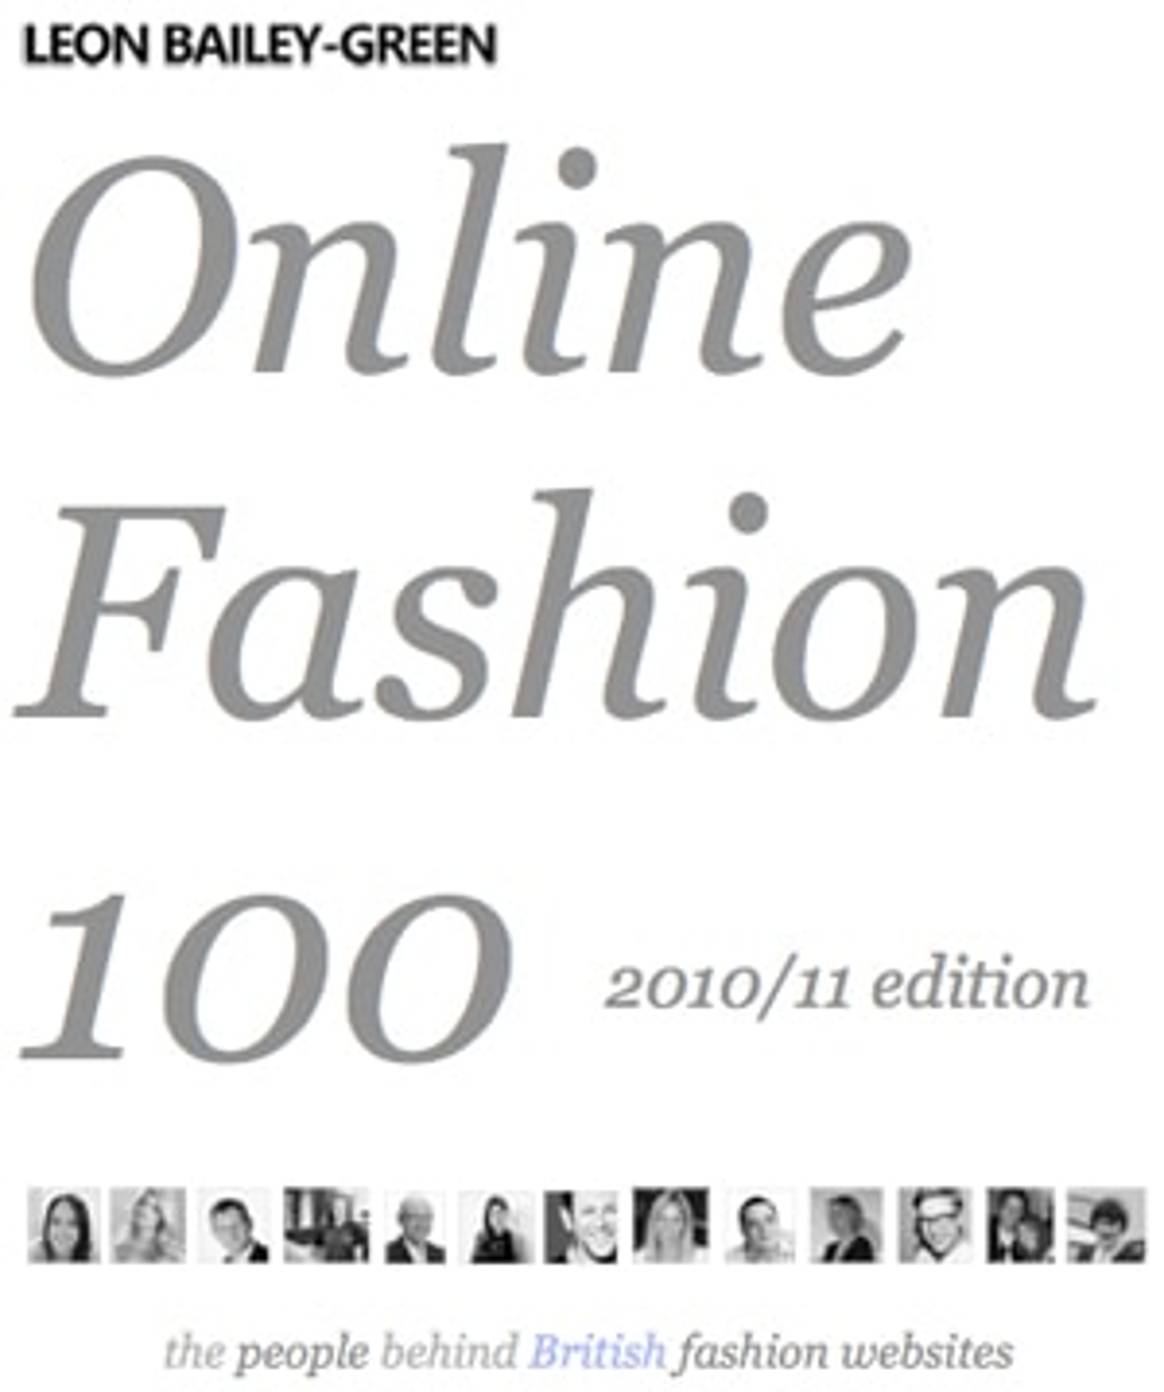 FashionUnited ranks in Fashion top 100